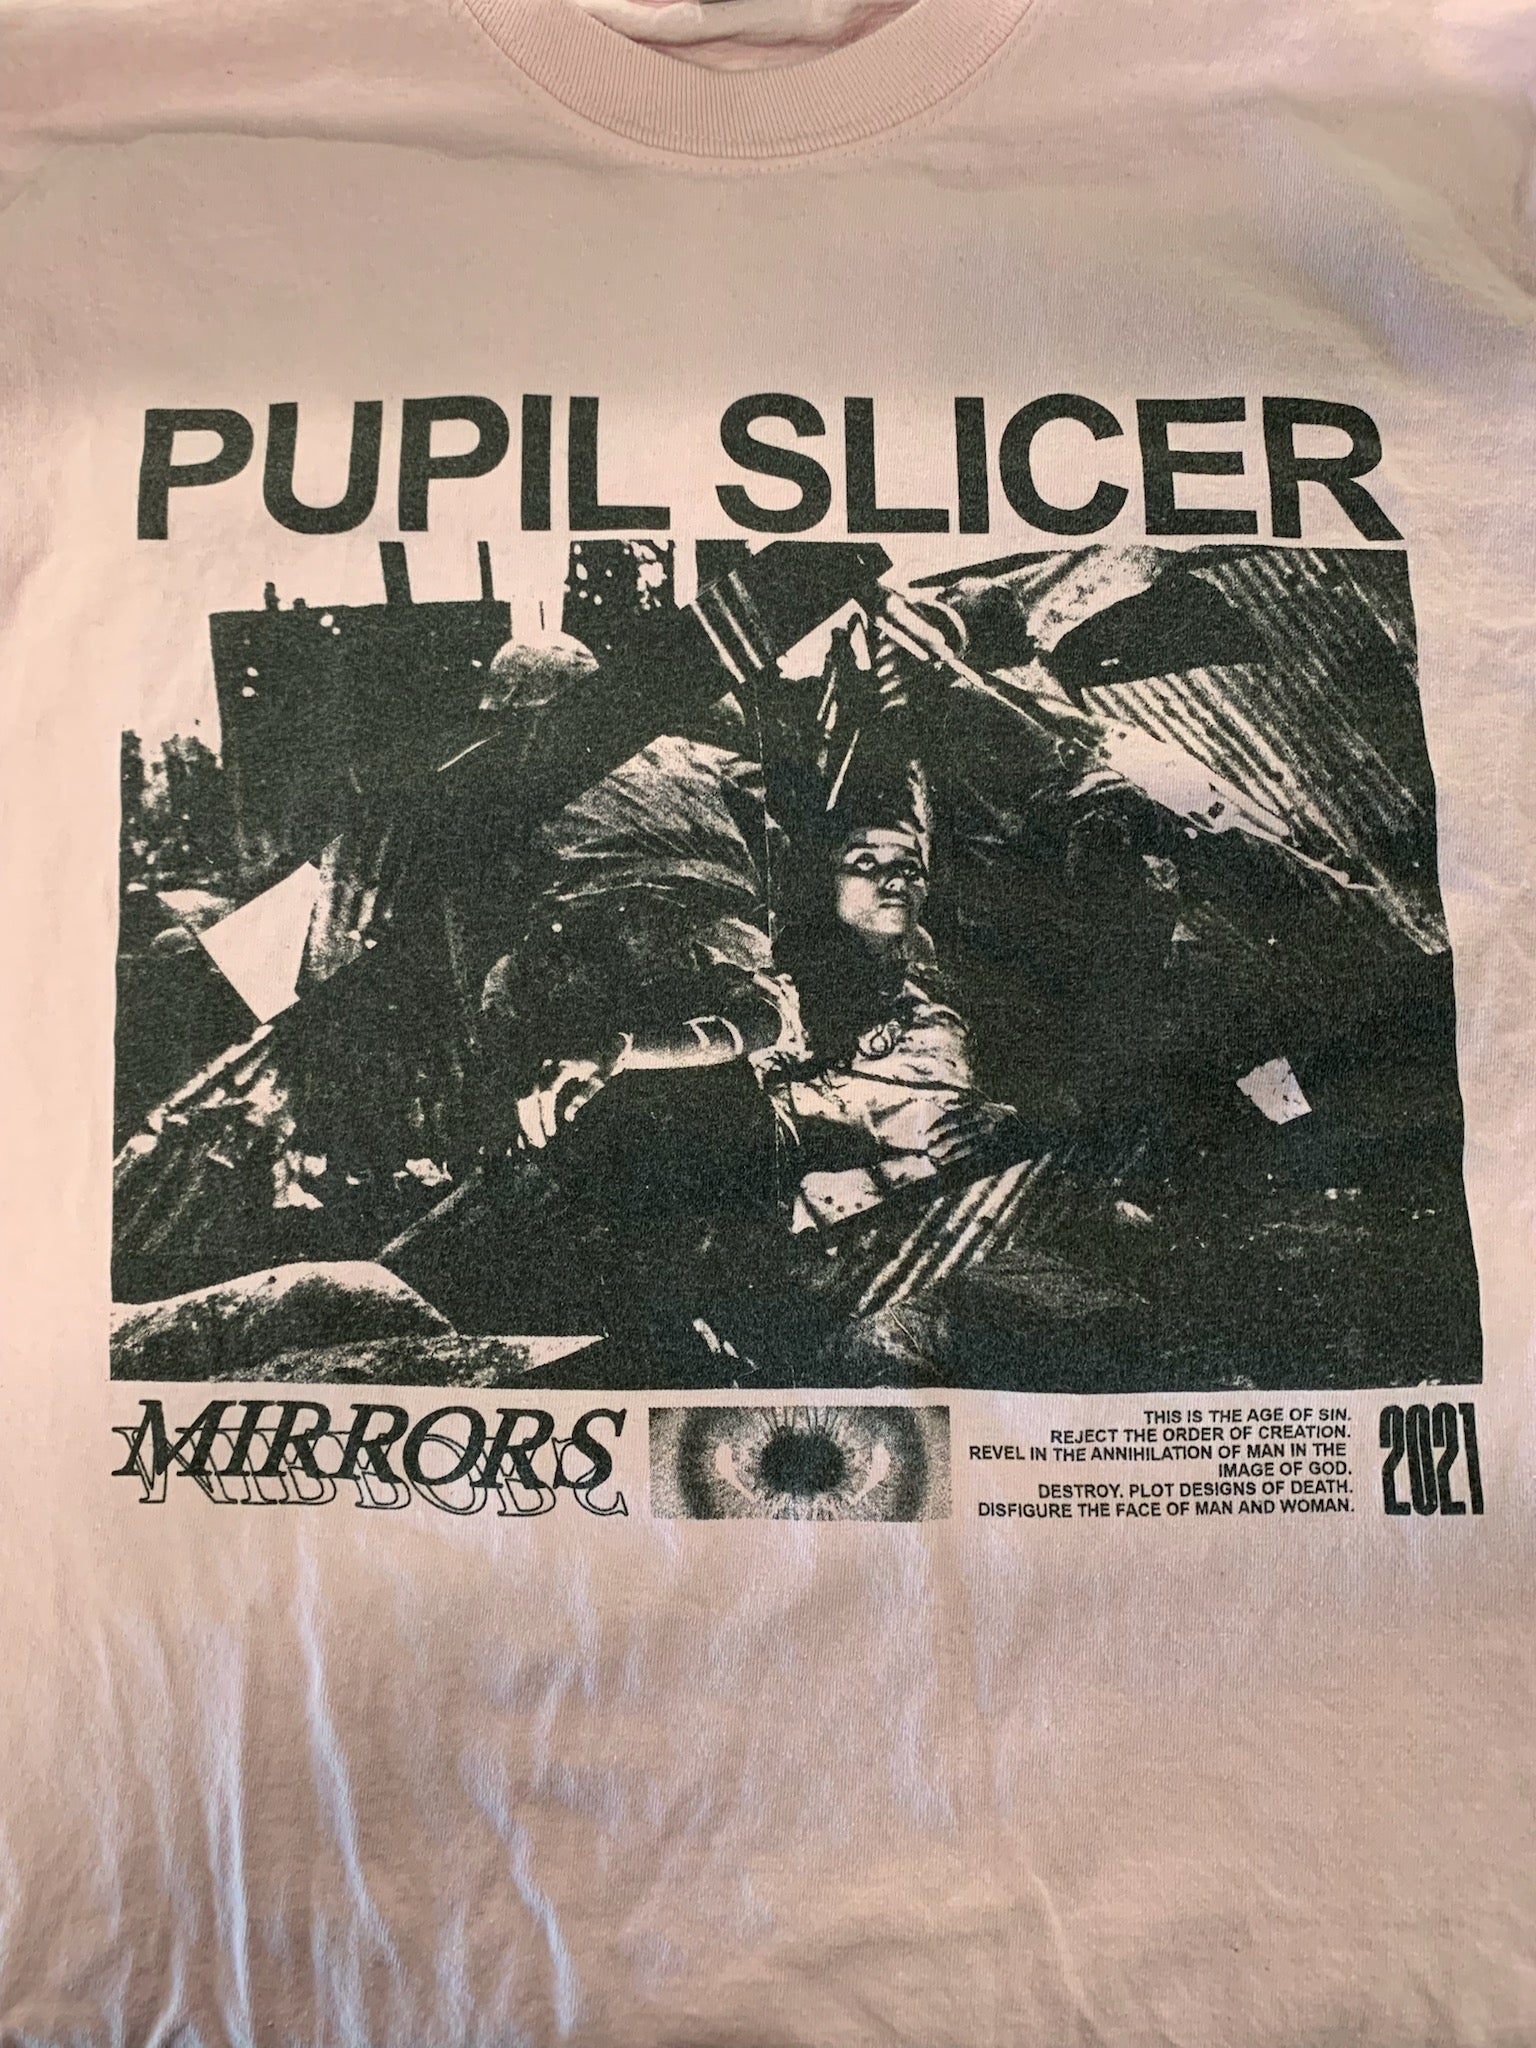 Pupil Slicer Mirrors Longsleeve, Pink, M